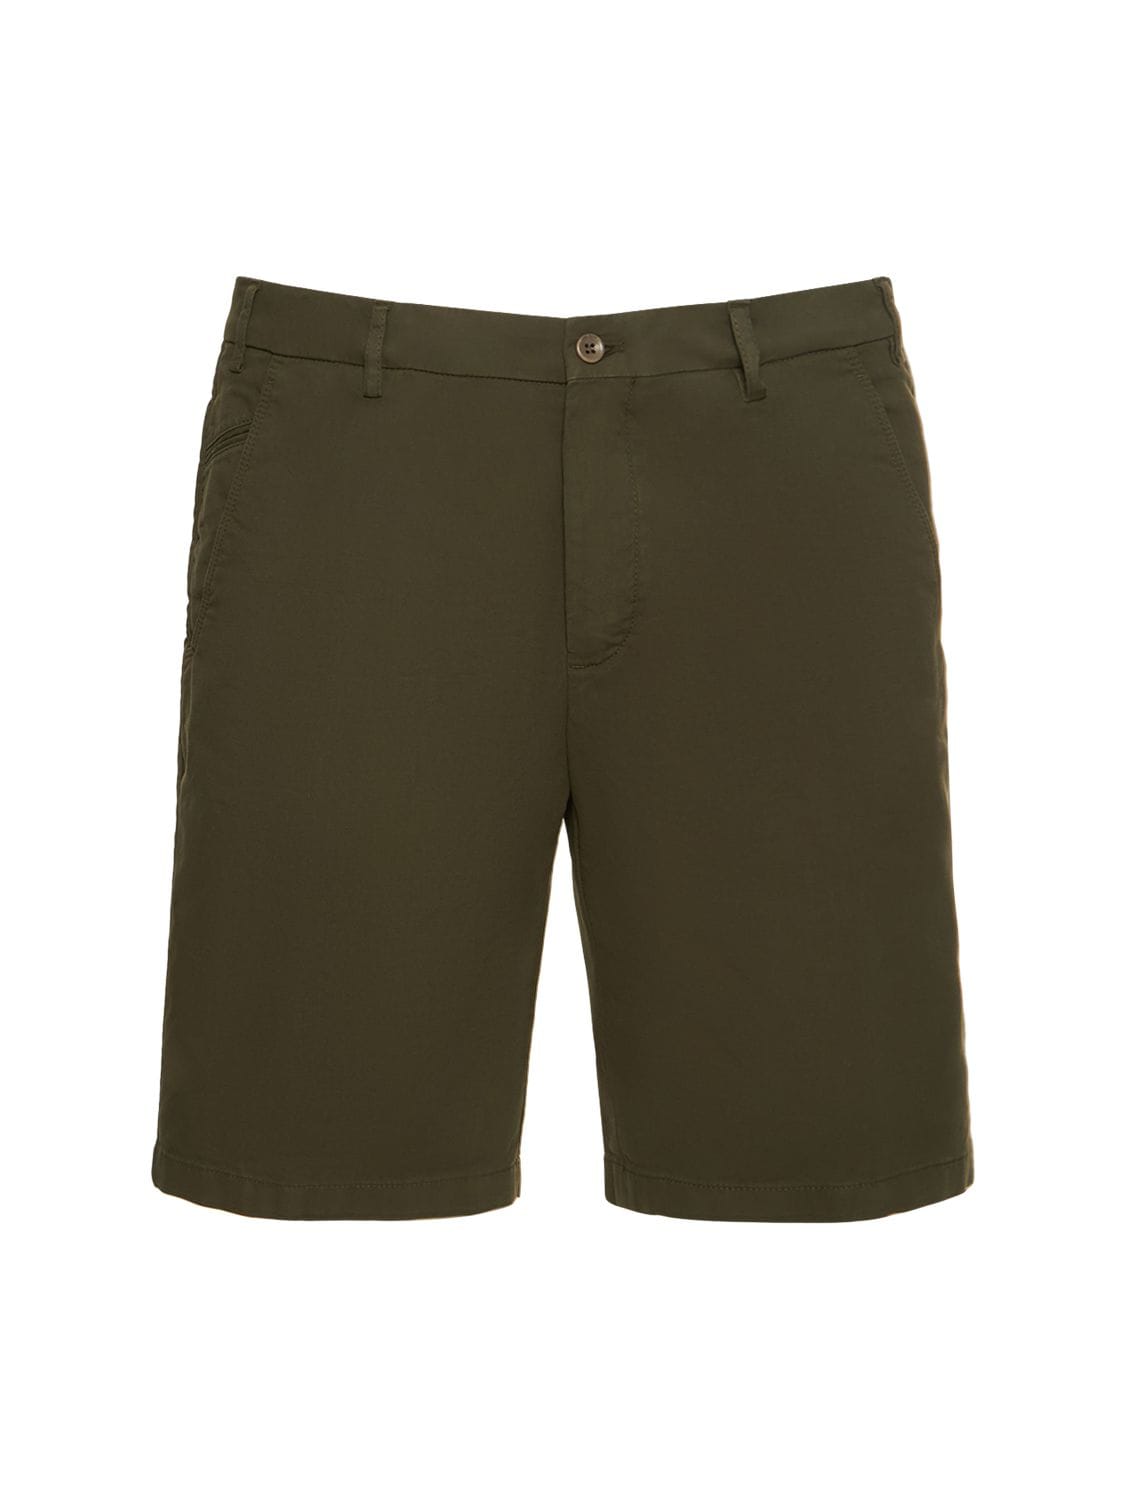 Image of Sport Cotton Bermuda Deck Shorts